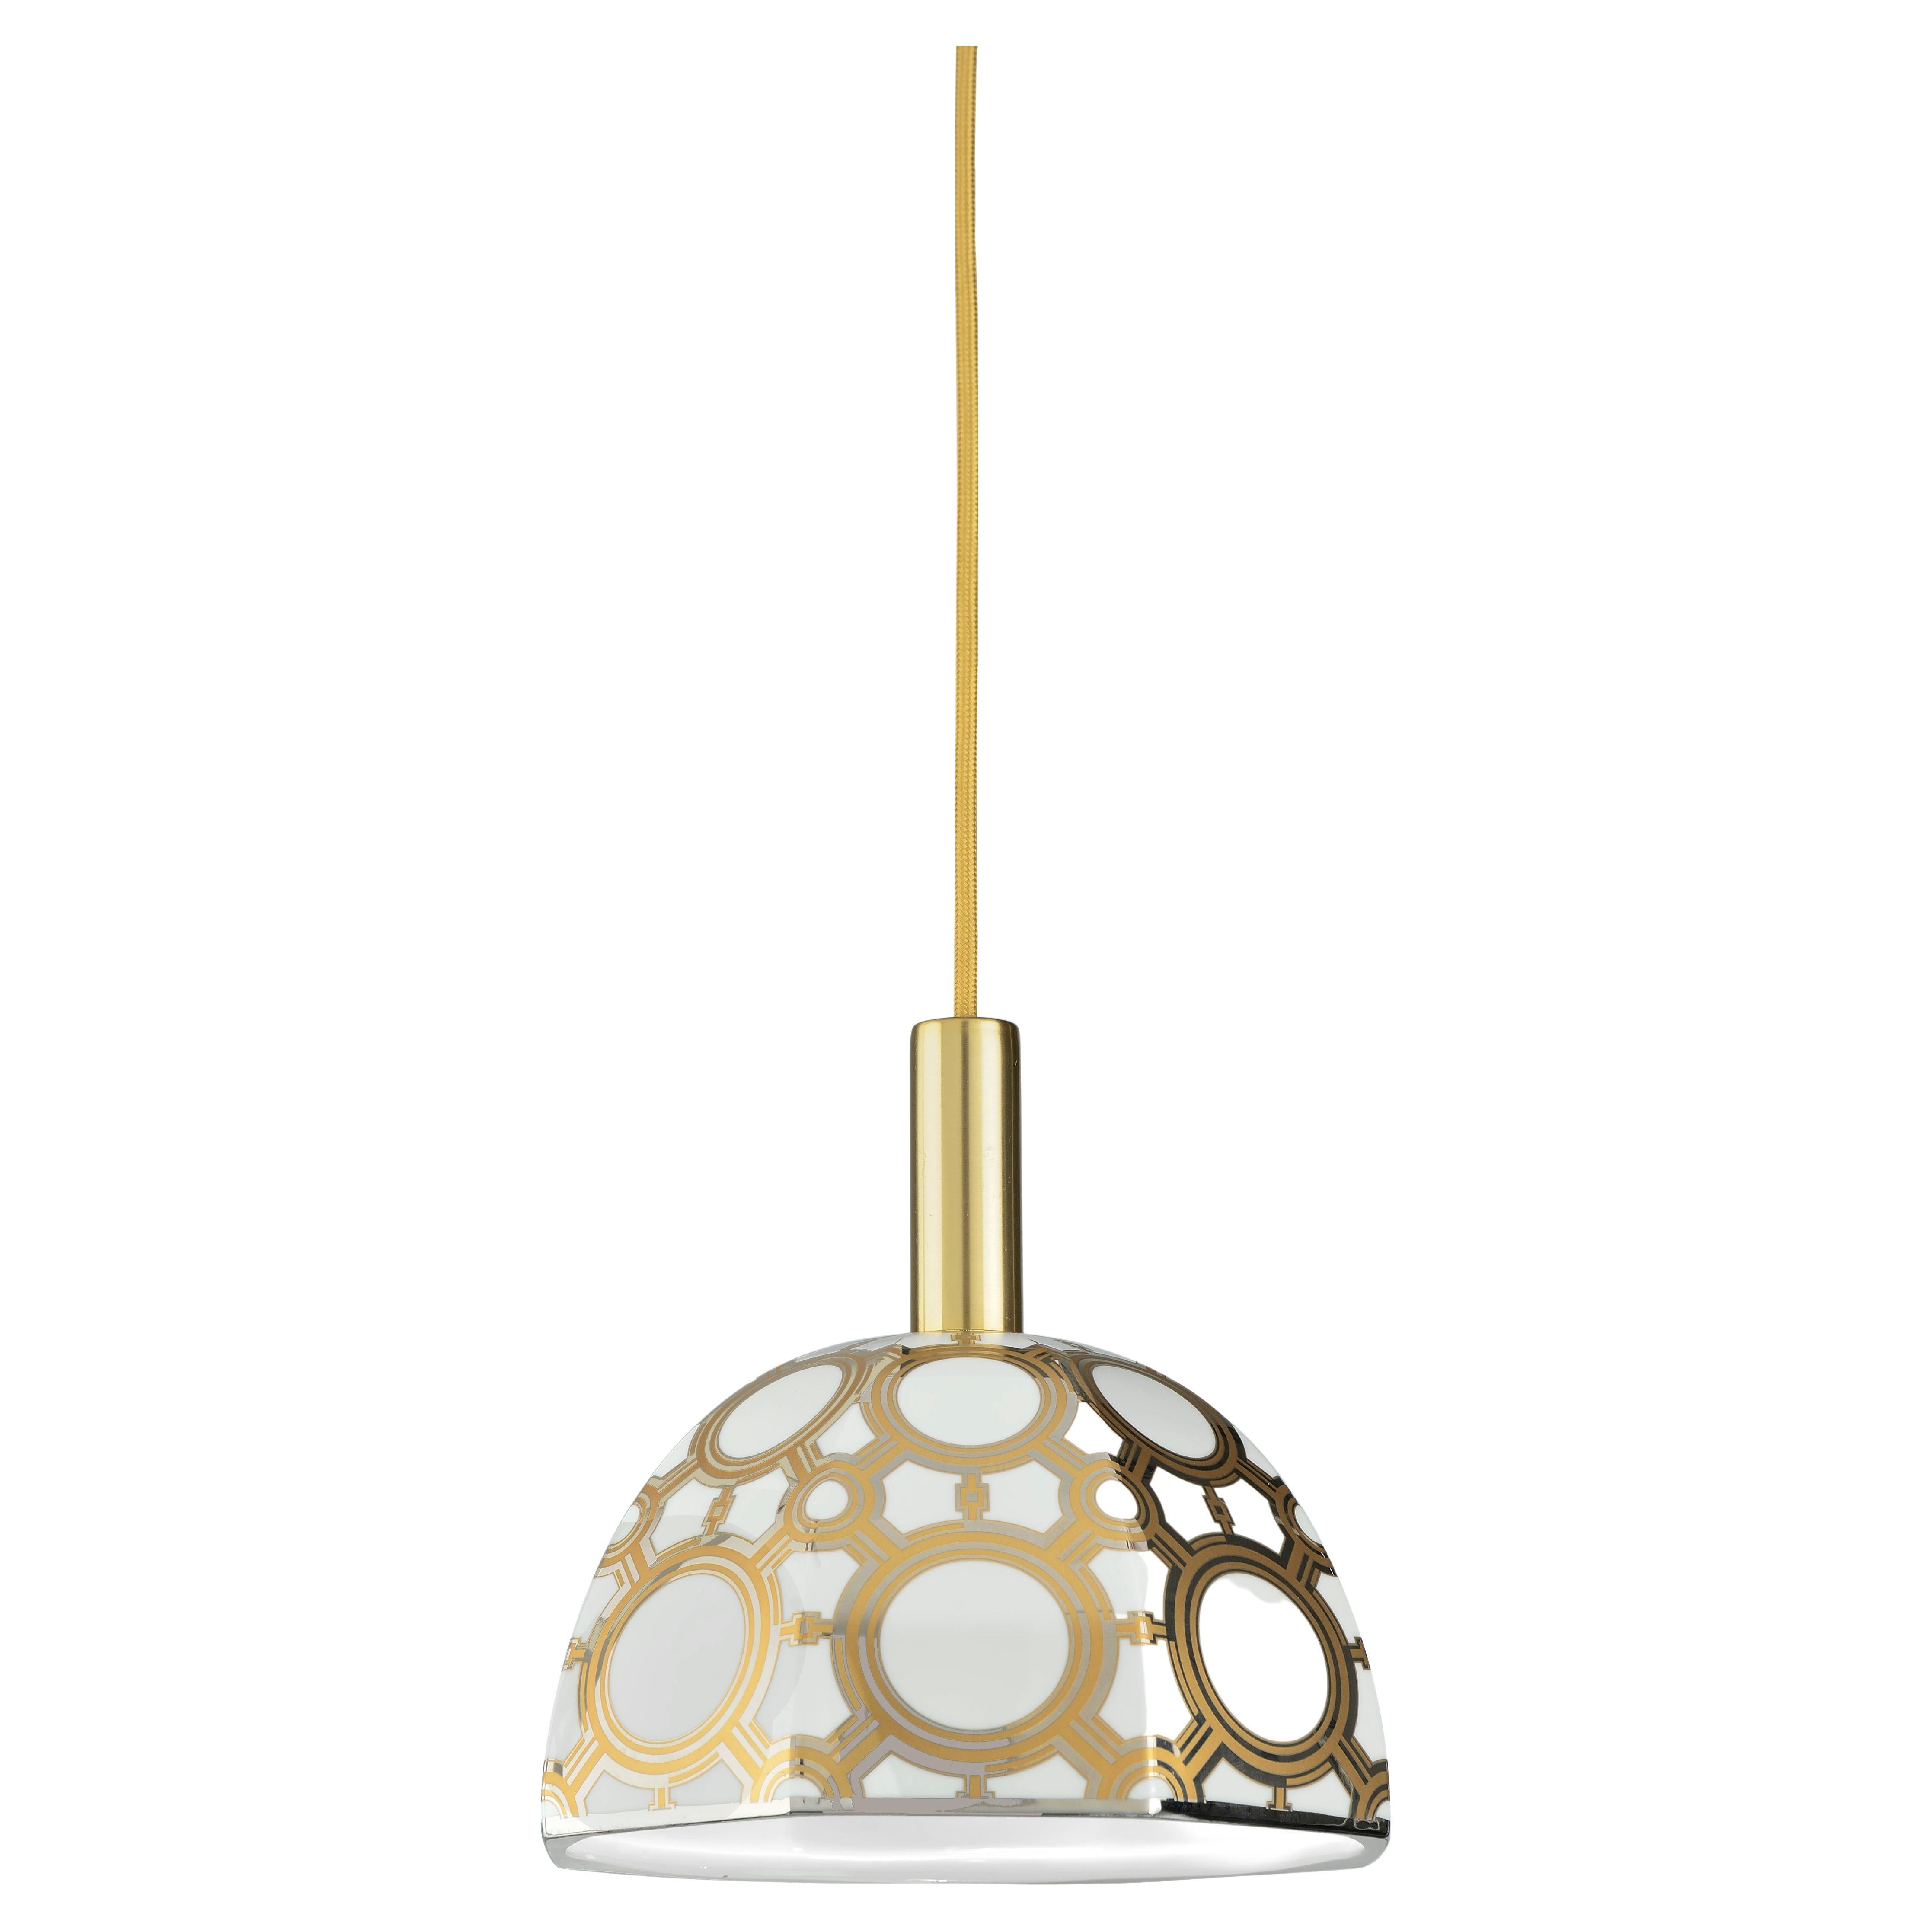 Palazzo Vecchio Collection, Suspension Lamp, Gold and Platinum Decorations